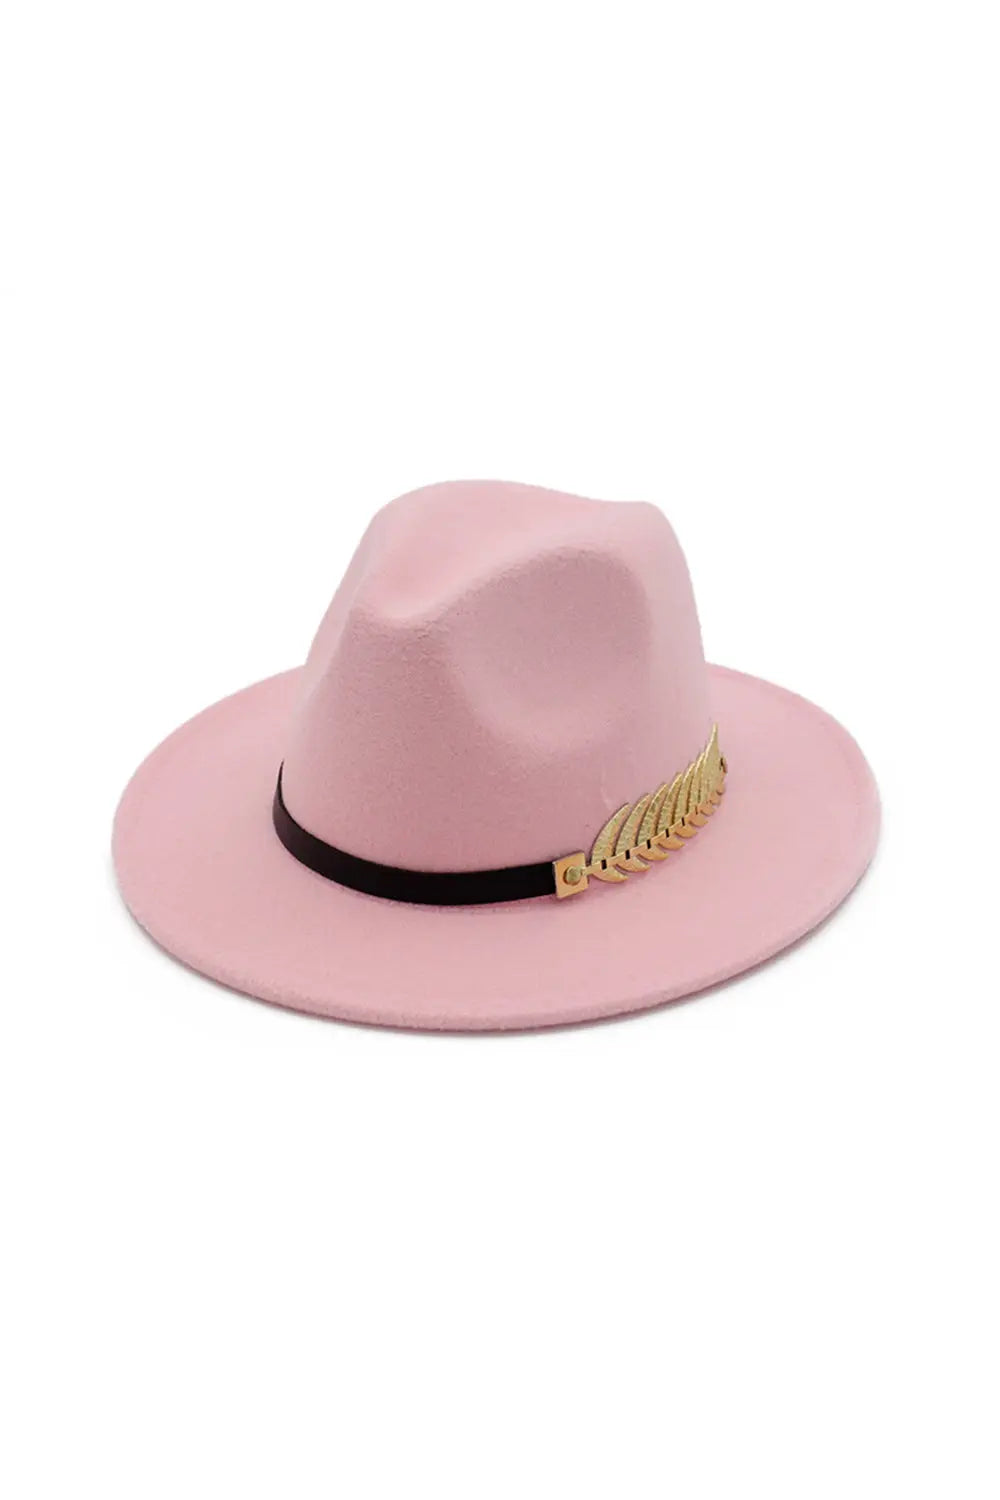 Jazz Hat - Pink - Strange Clothes